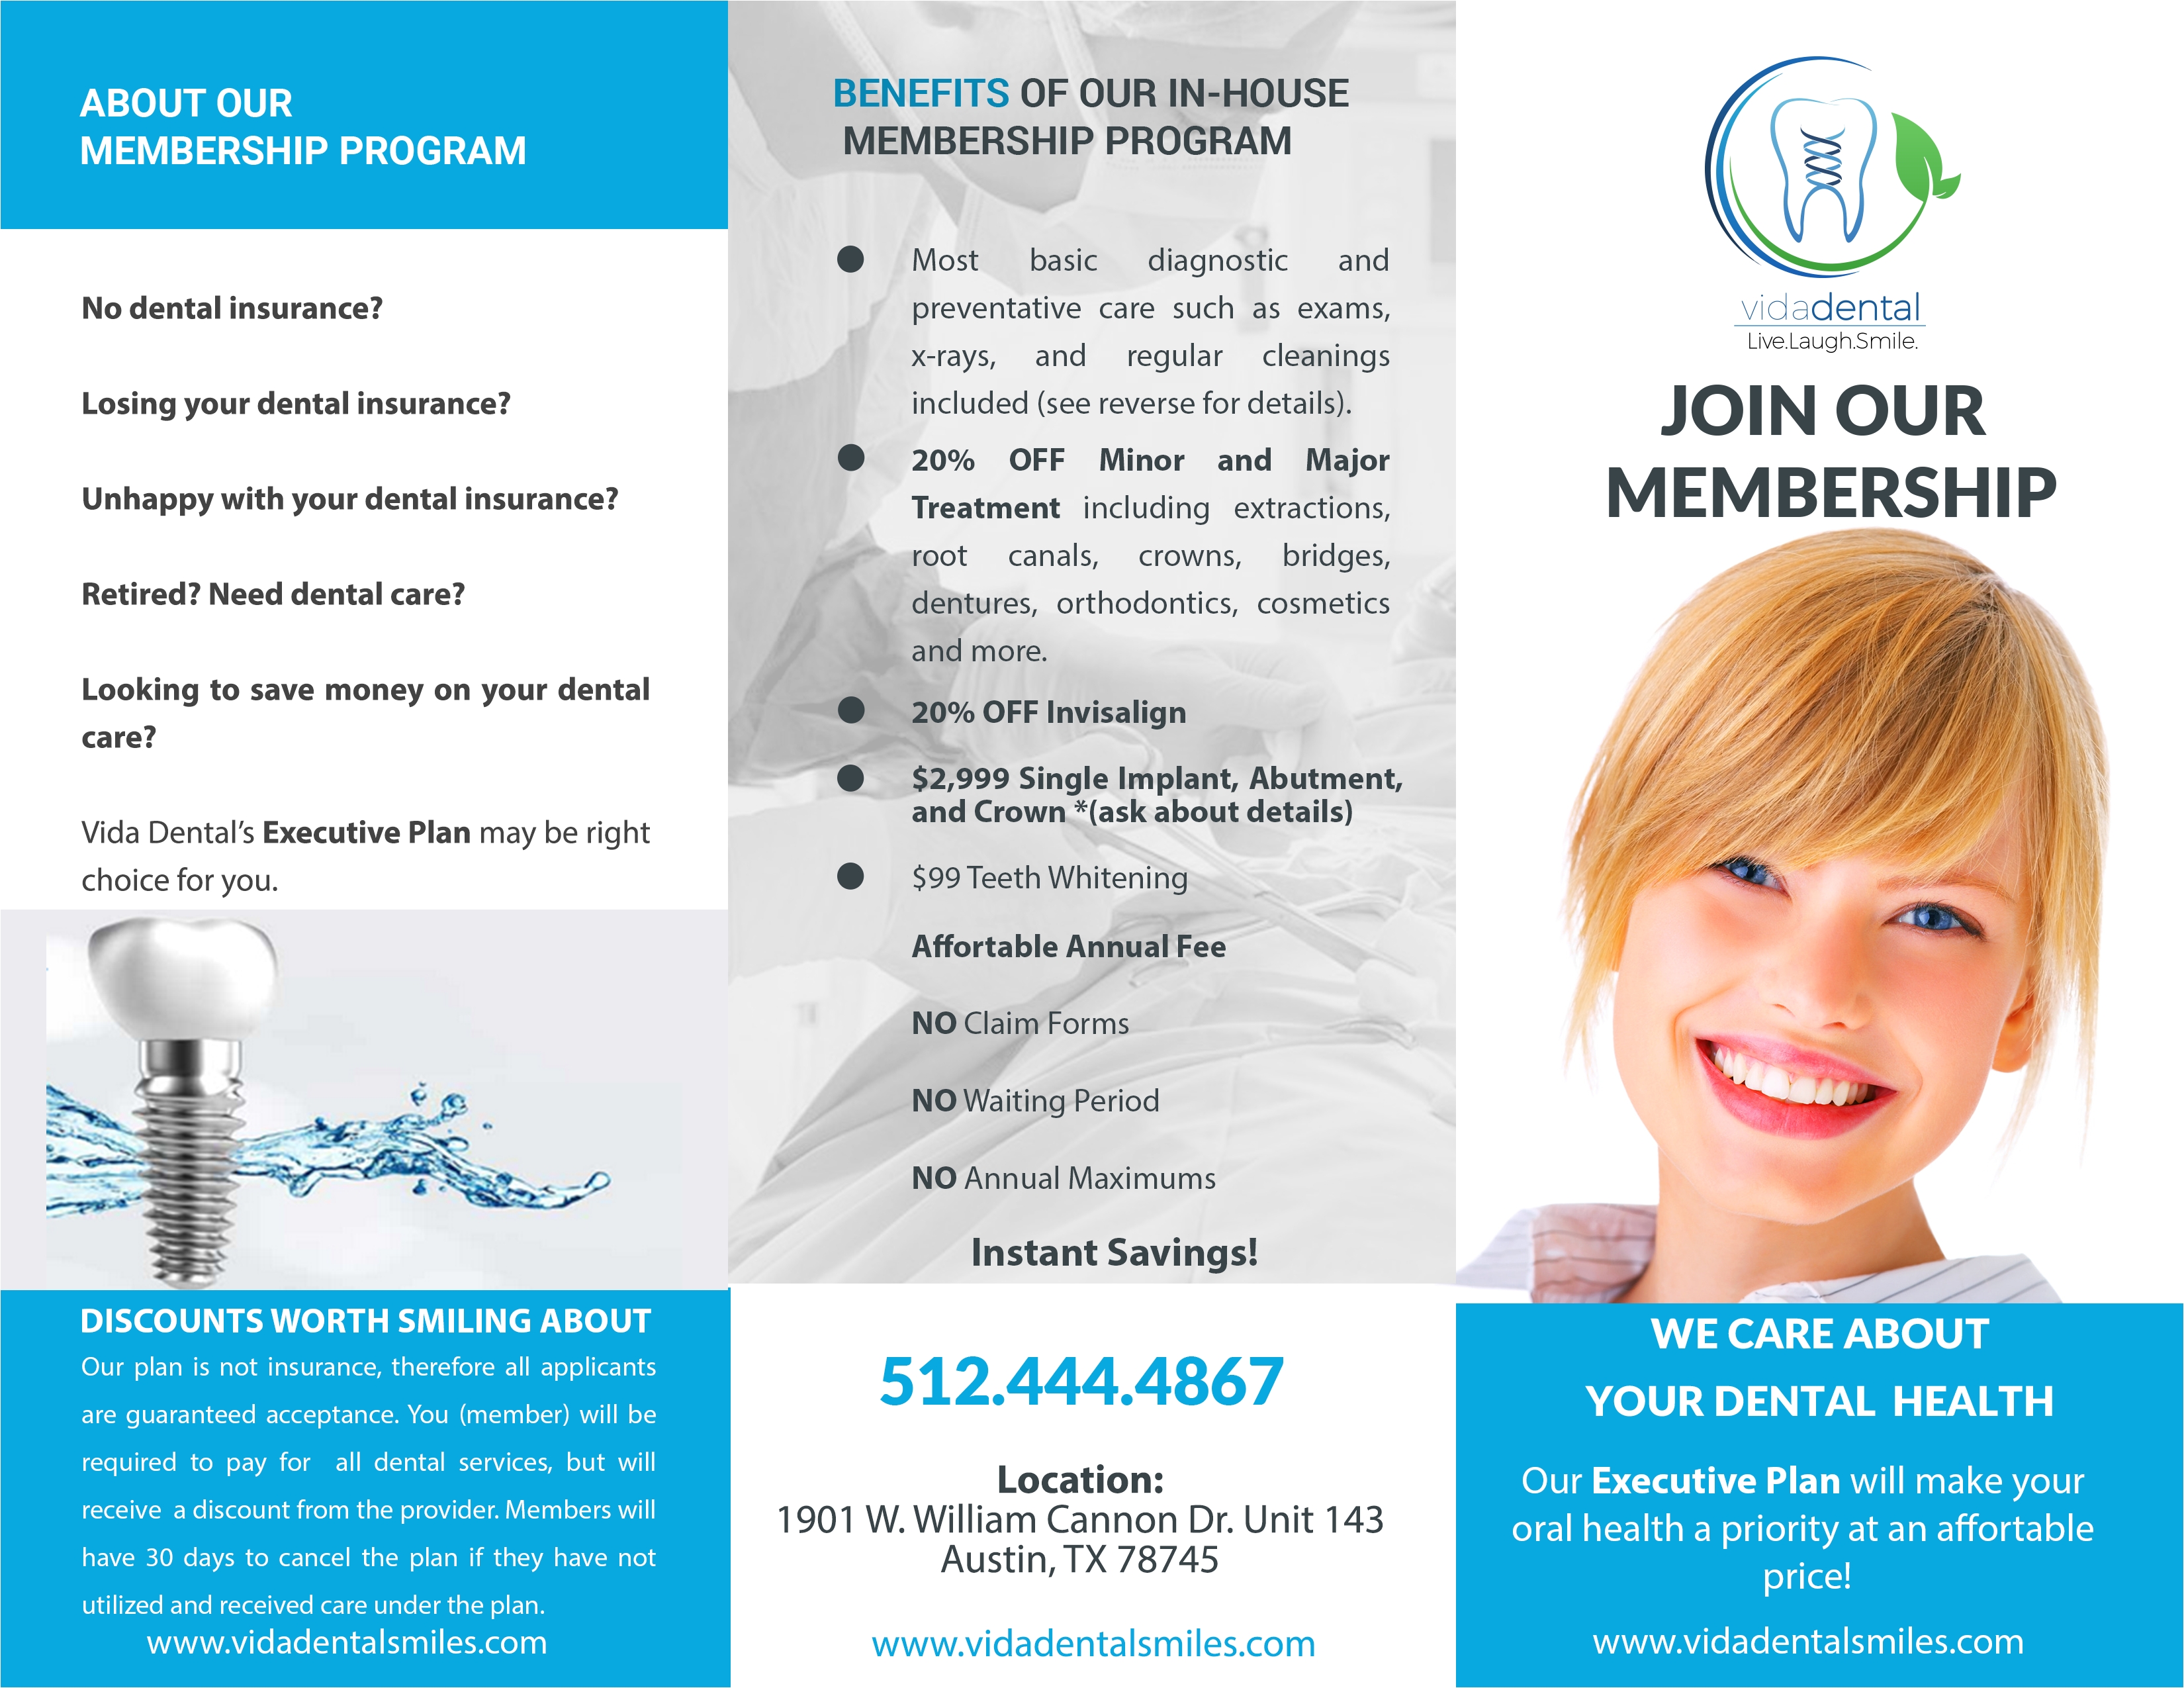 vida dental membership program austin tx exciting in house dental insurance plans